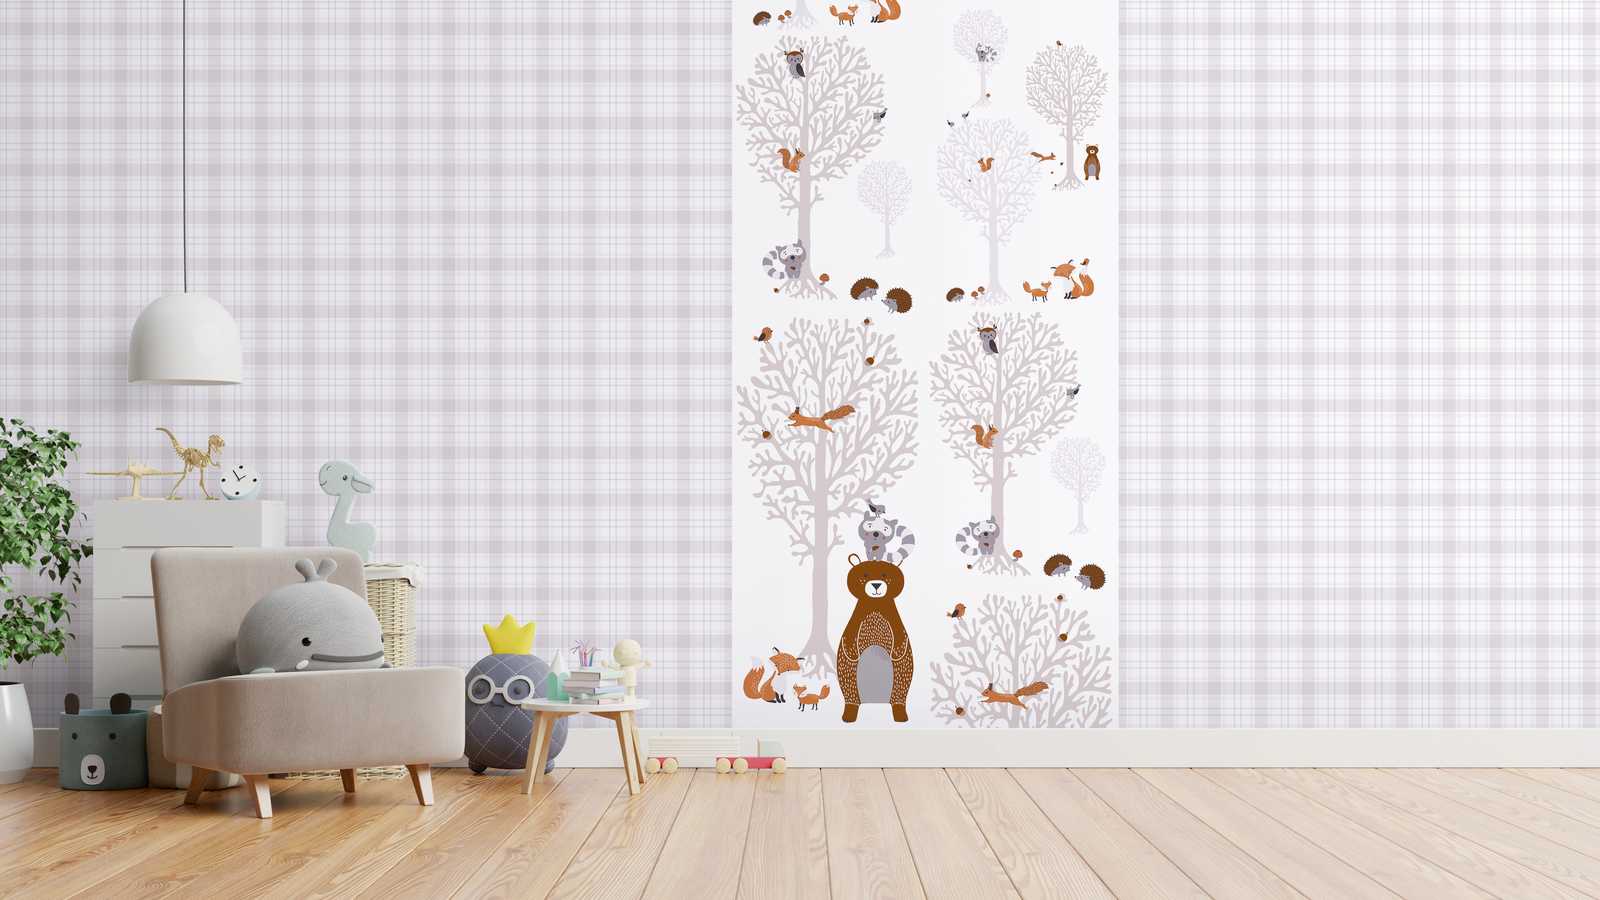             Girls room wallpaper forest animals - brown, grey, white
        